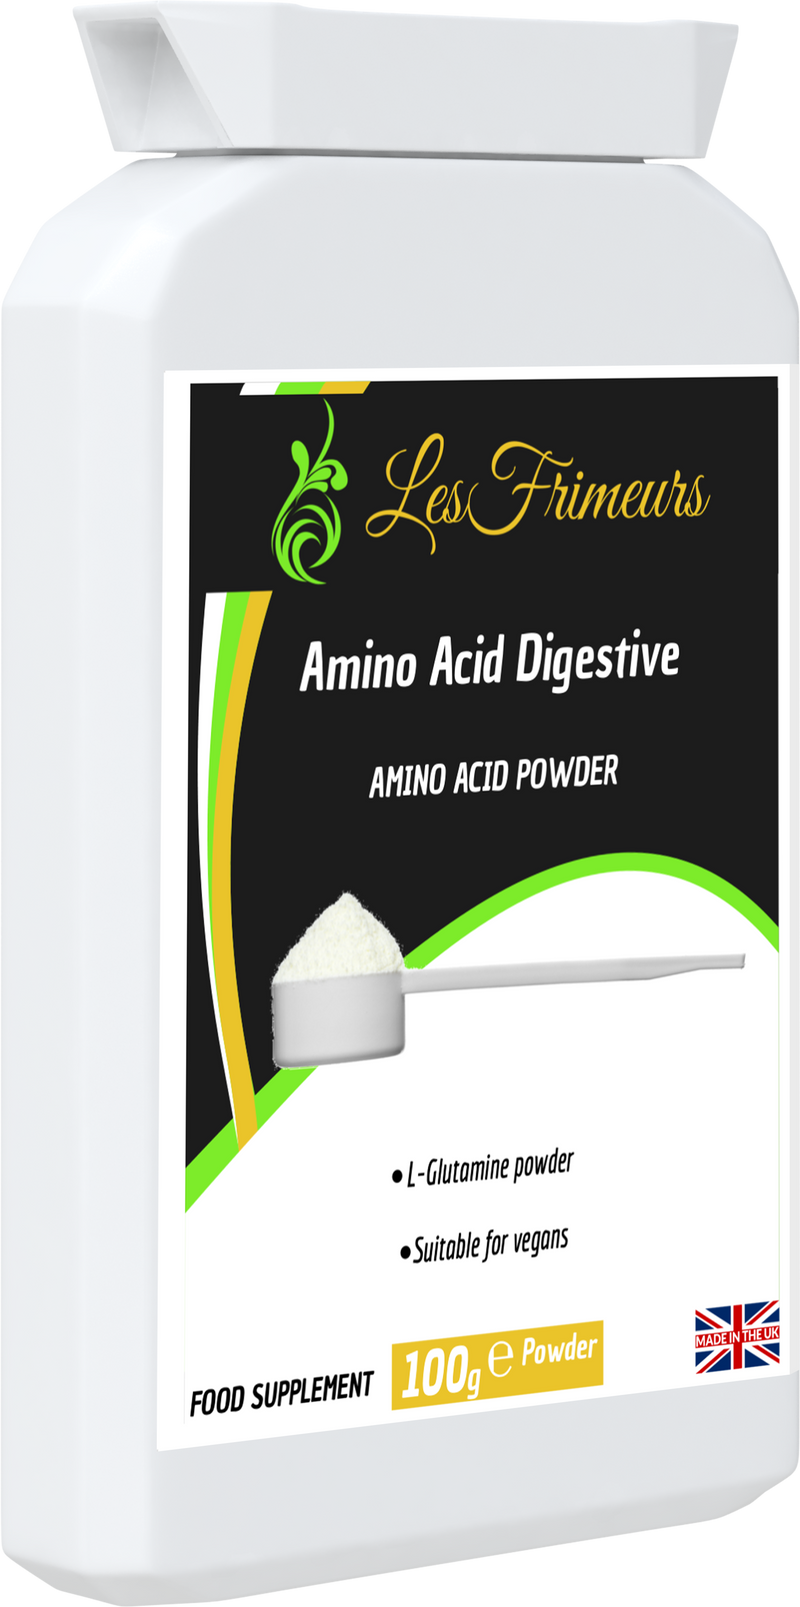 Amino Acid Digestive